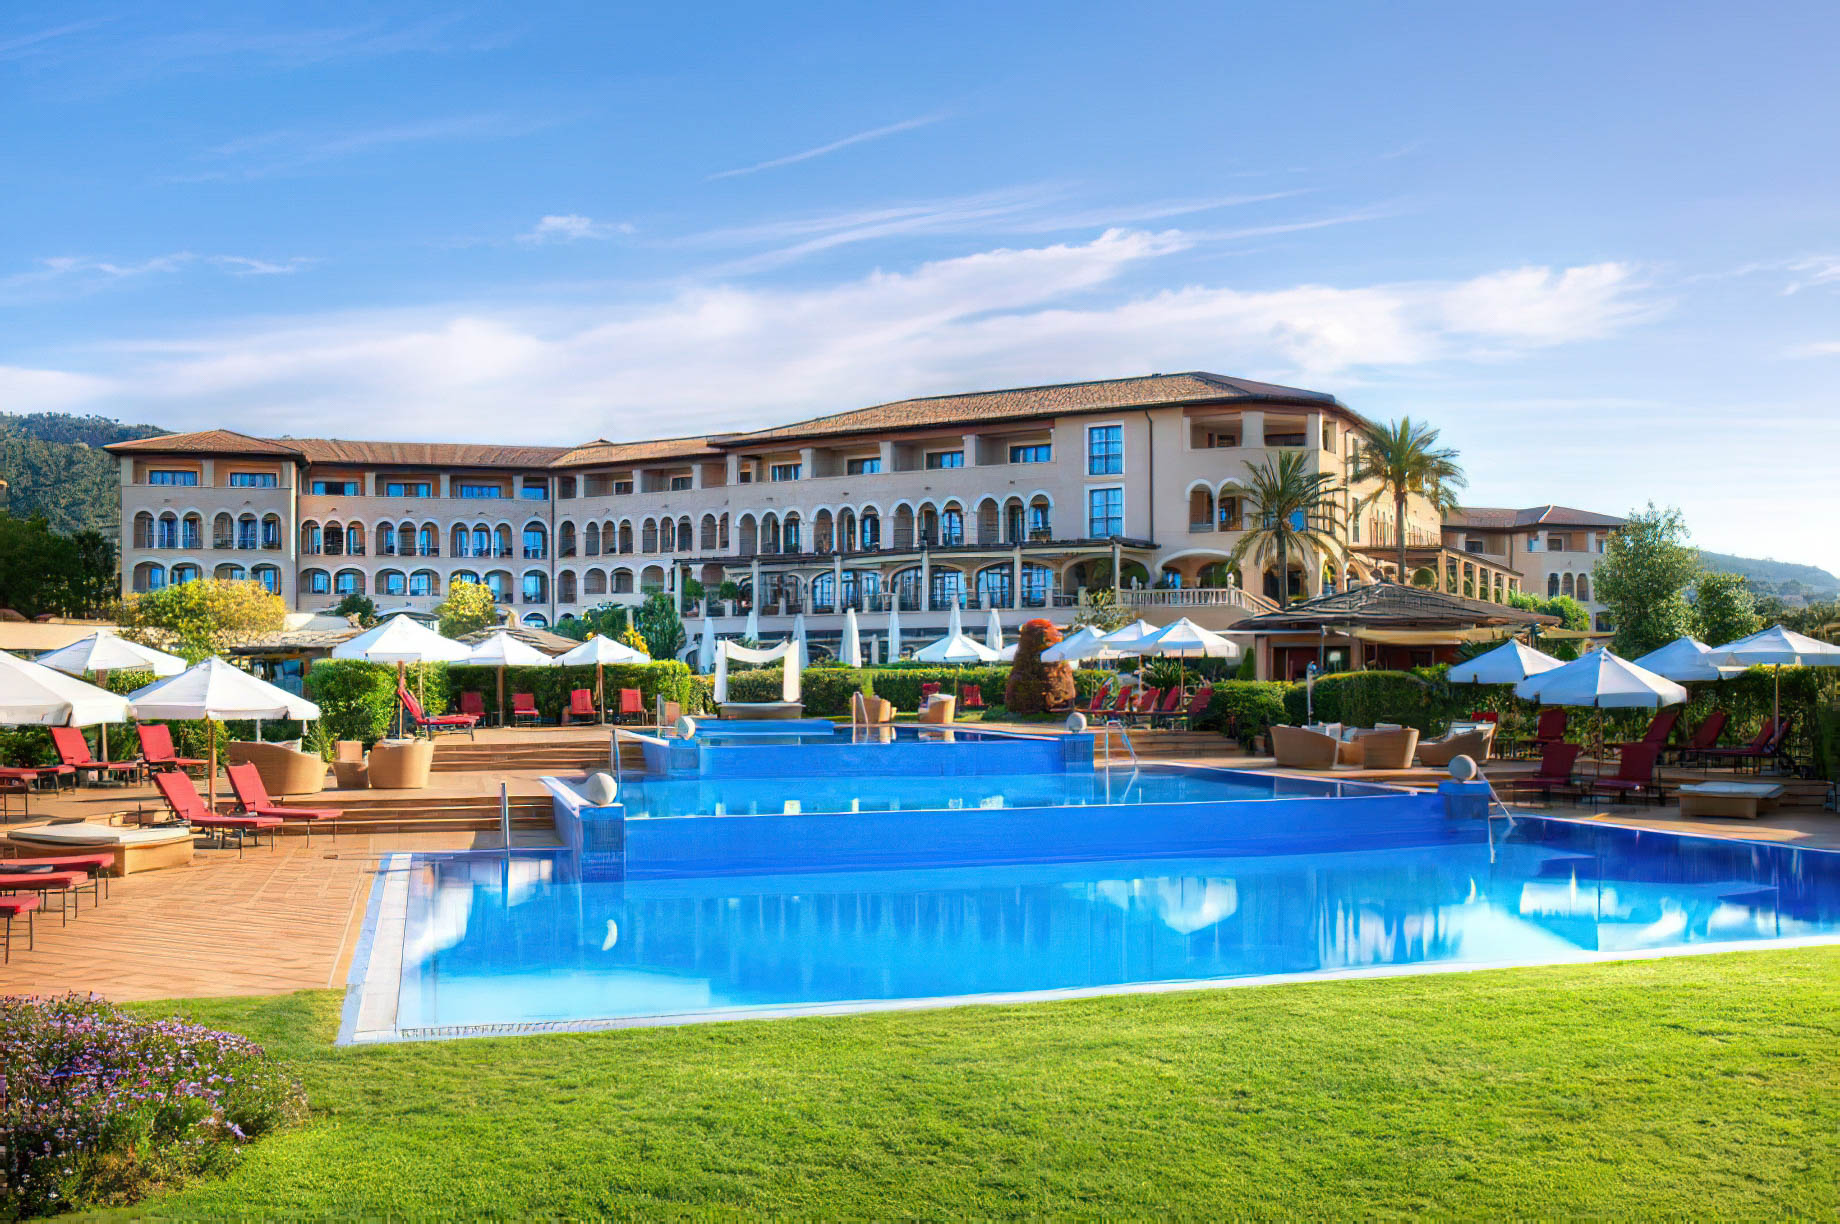 The St. Regis Mardavall Mallorca Resort – Palma de Mallorca, Spain – Pool Hotel View